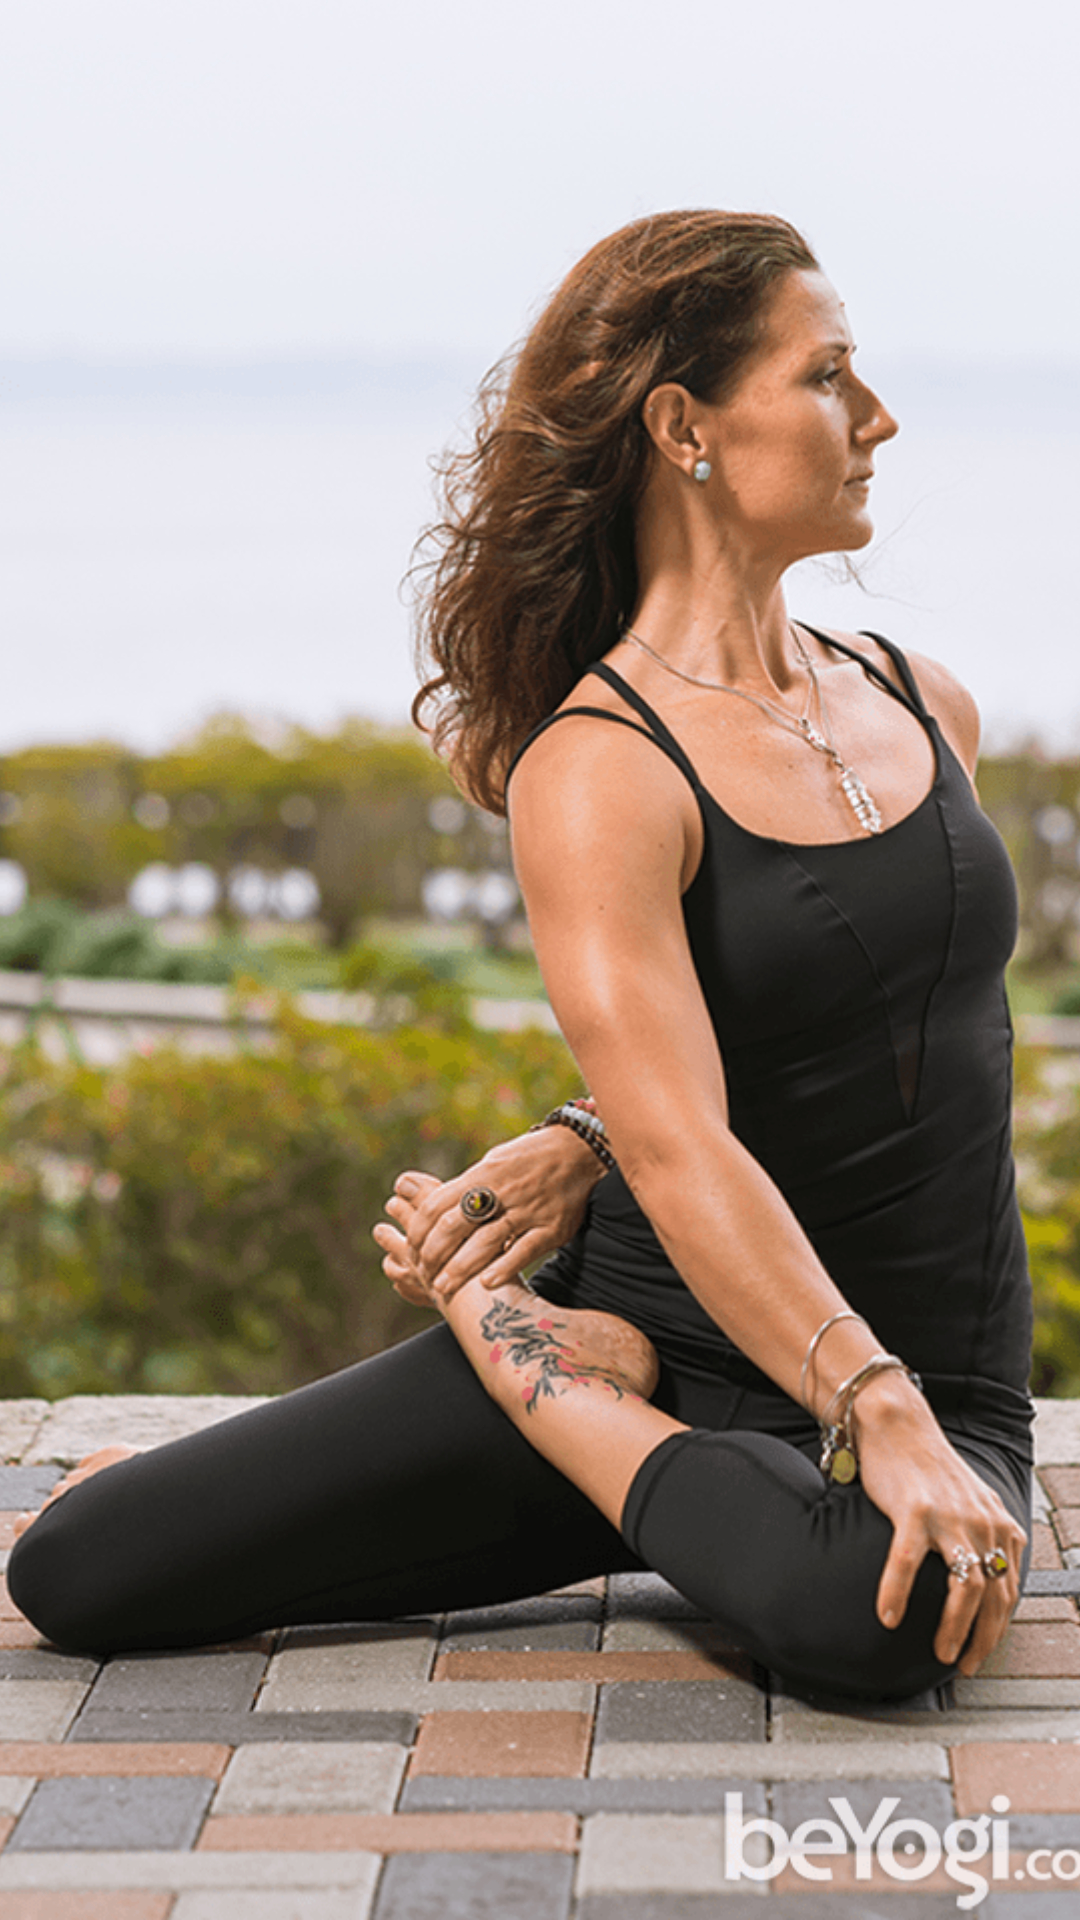 7 Yoga Poses To Improve Gut Health - News24